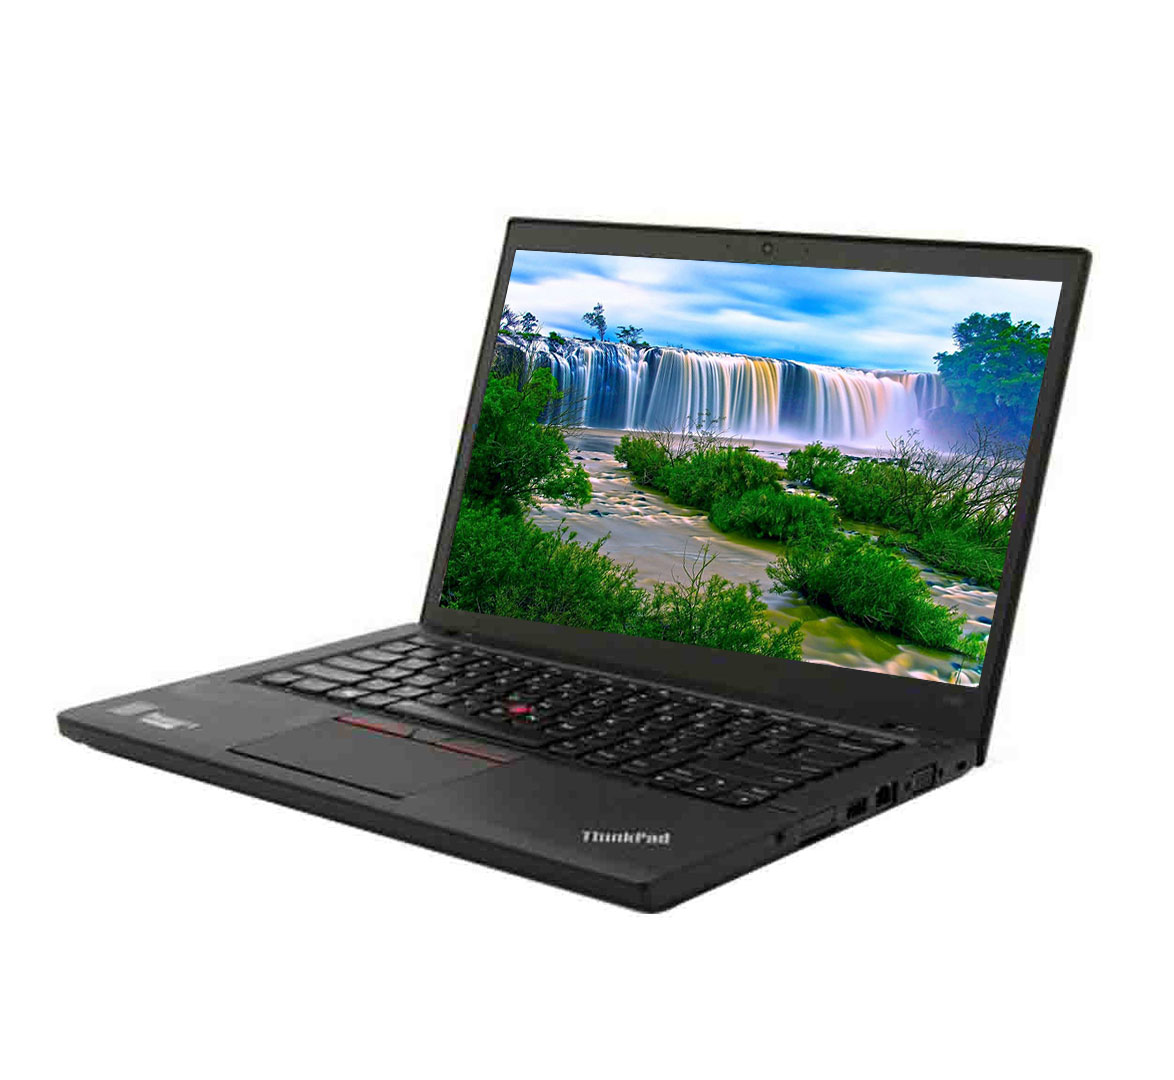 Lenovo ThinkPad T450s Business Laptop, Intel Core i5-5th Generation CPU, 8GB RAM, 256GB SSD, 14 inch Touchscreen, Windows 10 Pro